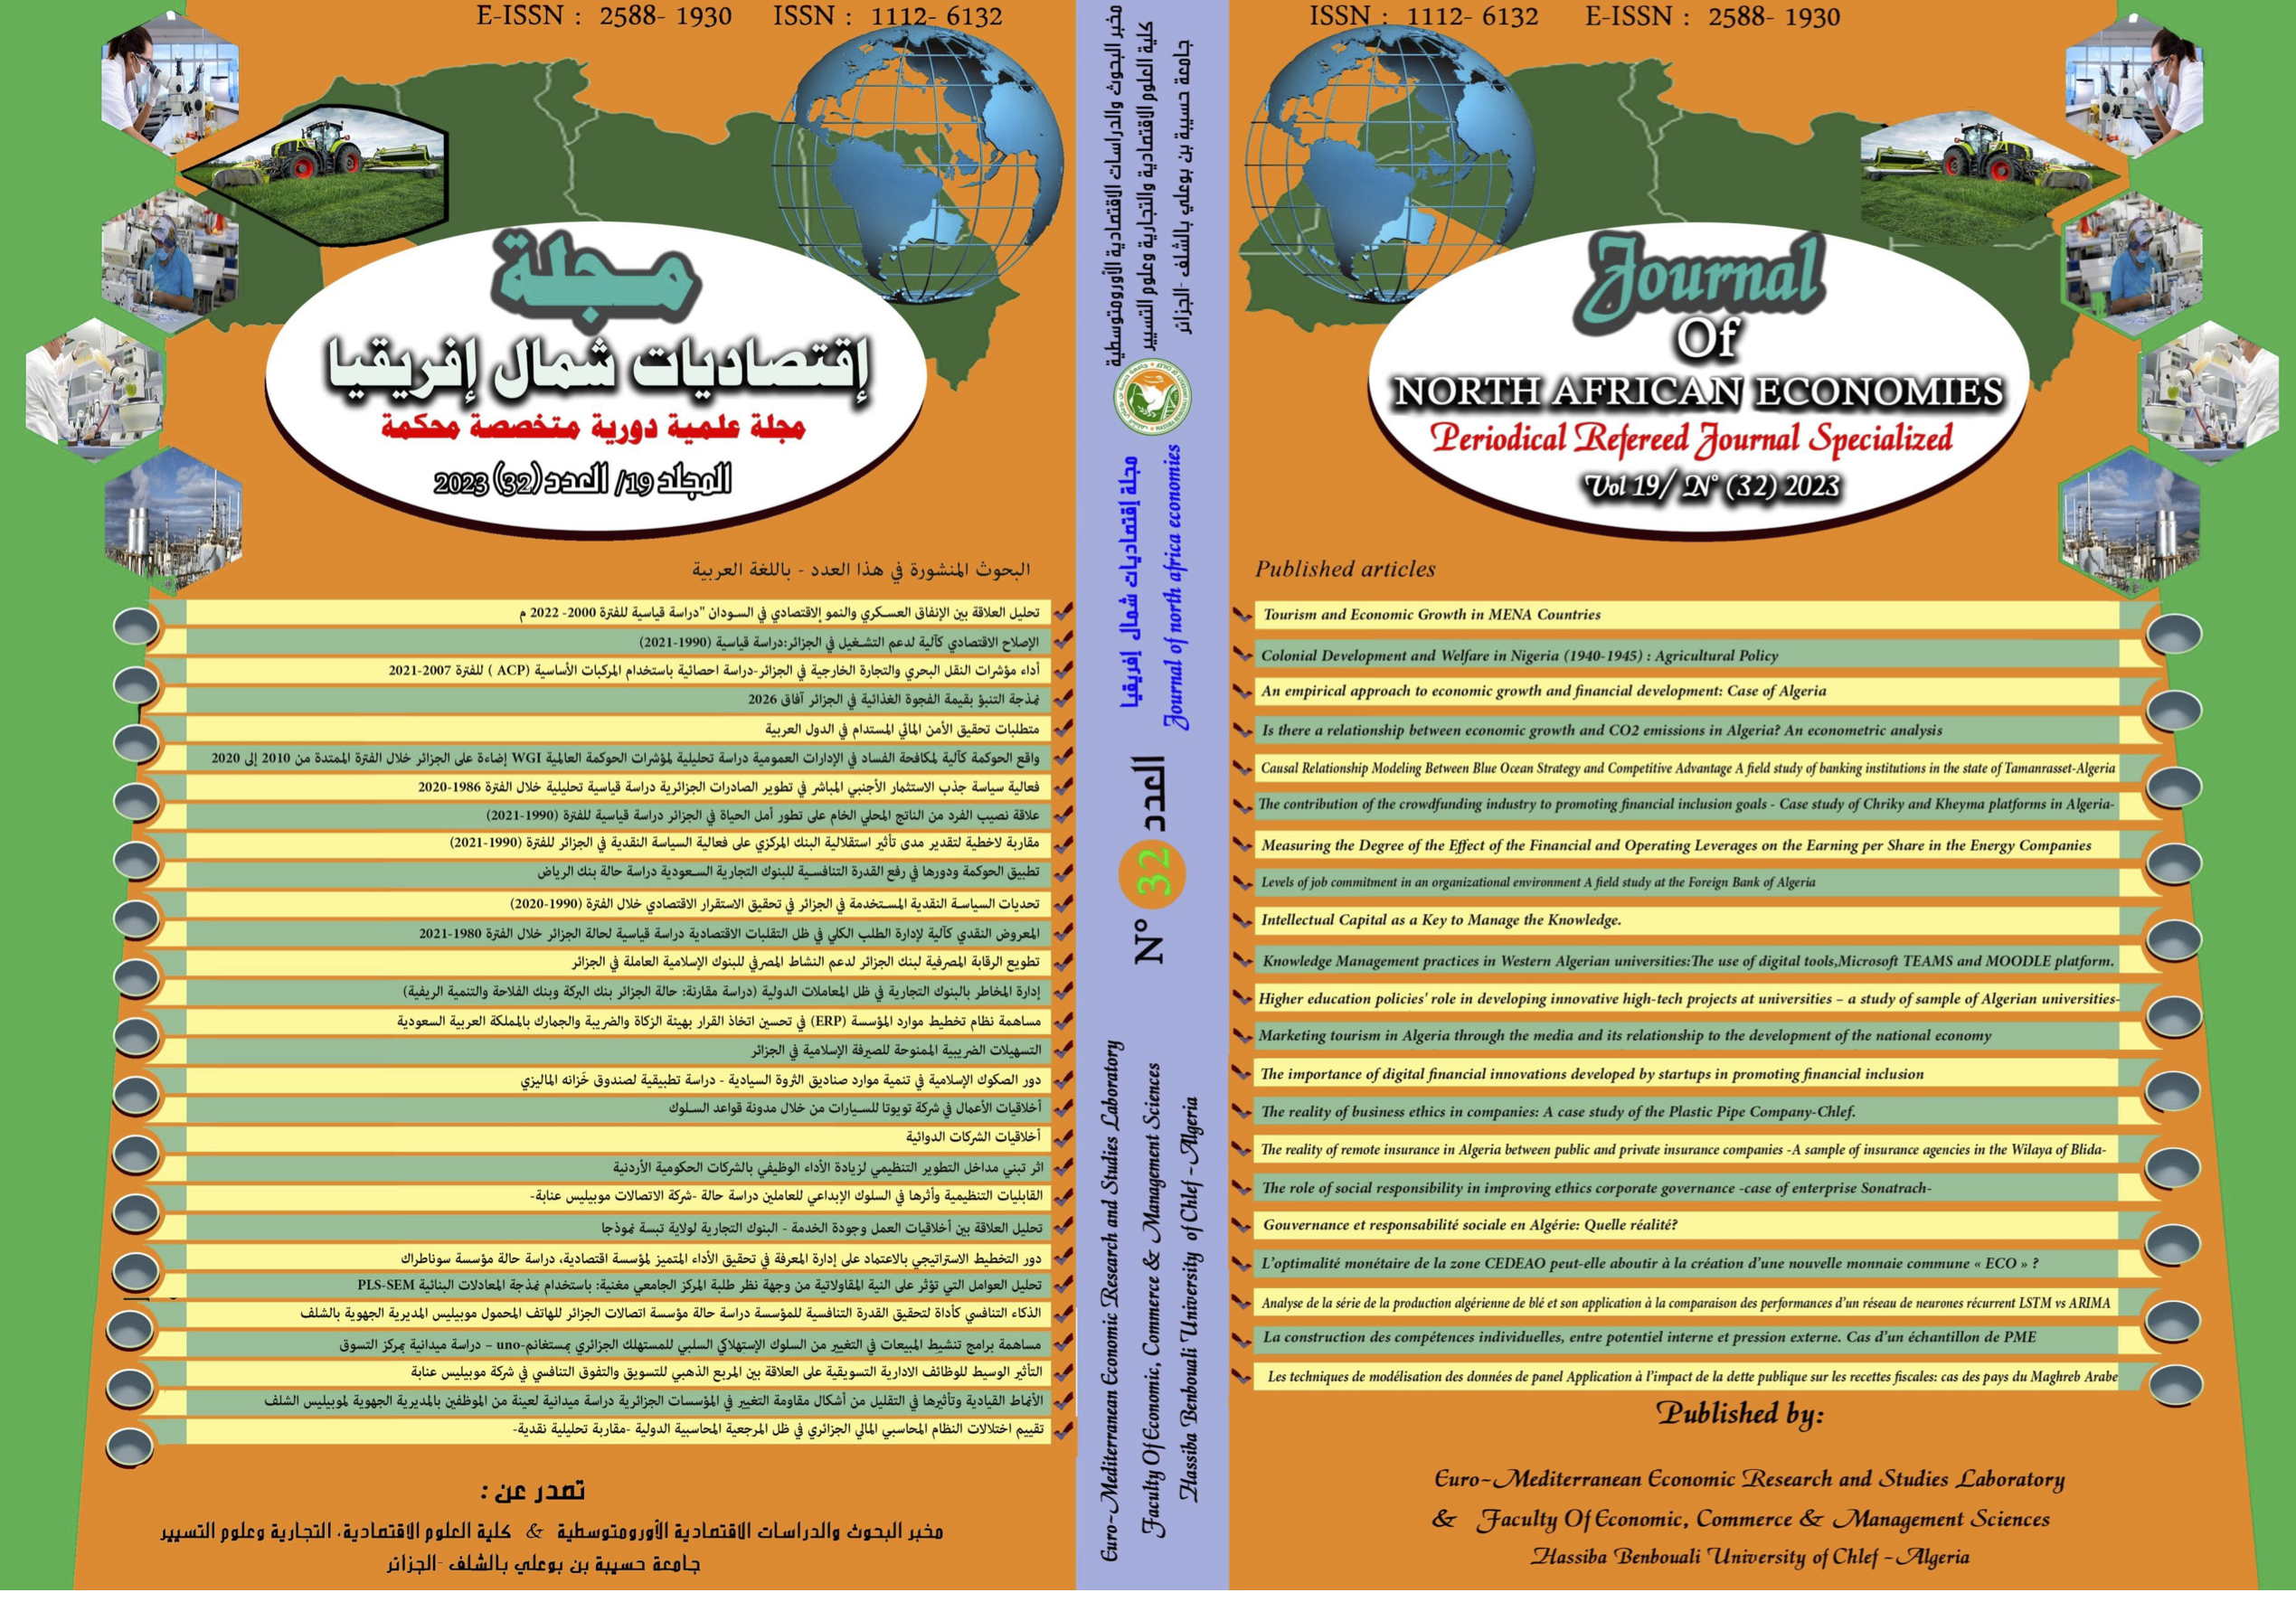 Journal of North African Economies